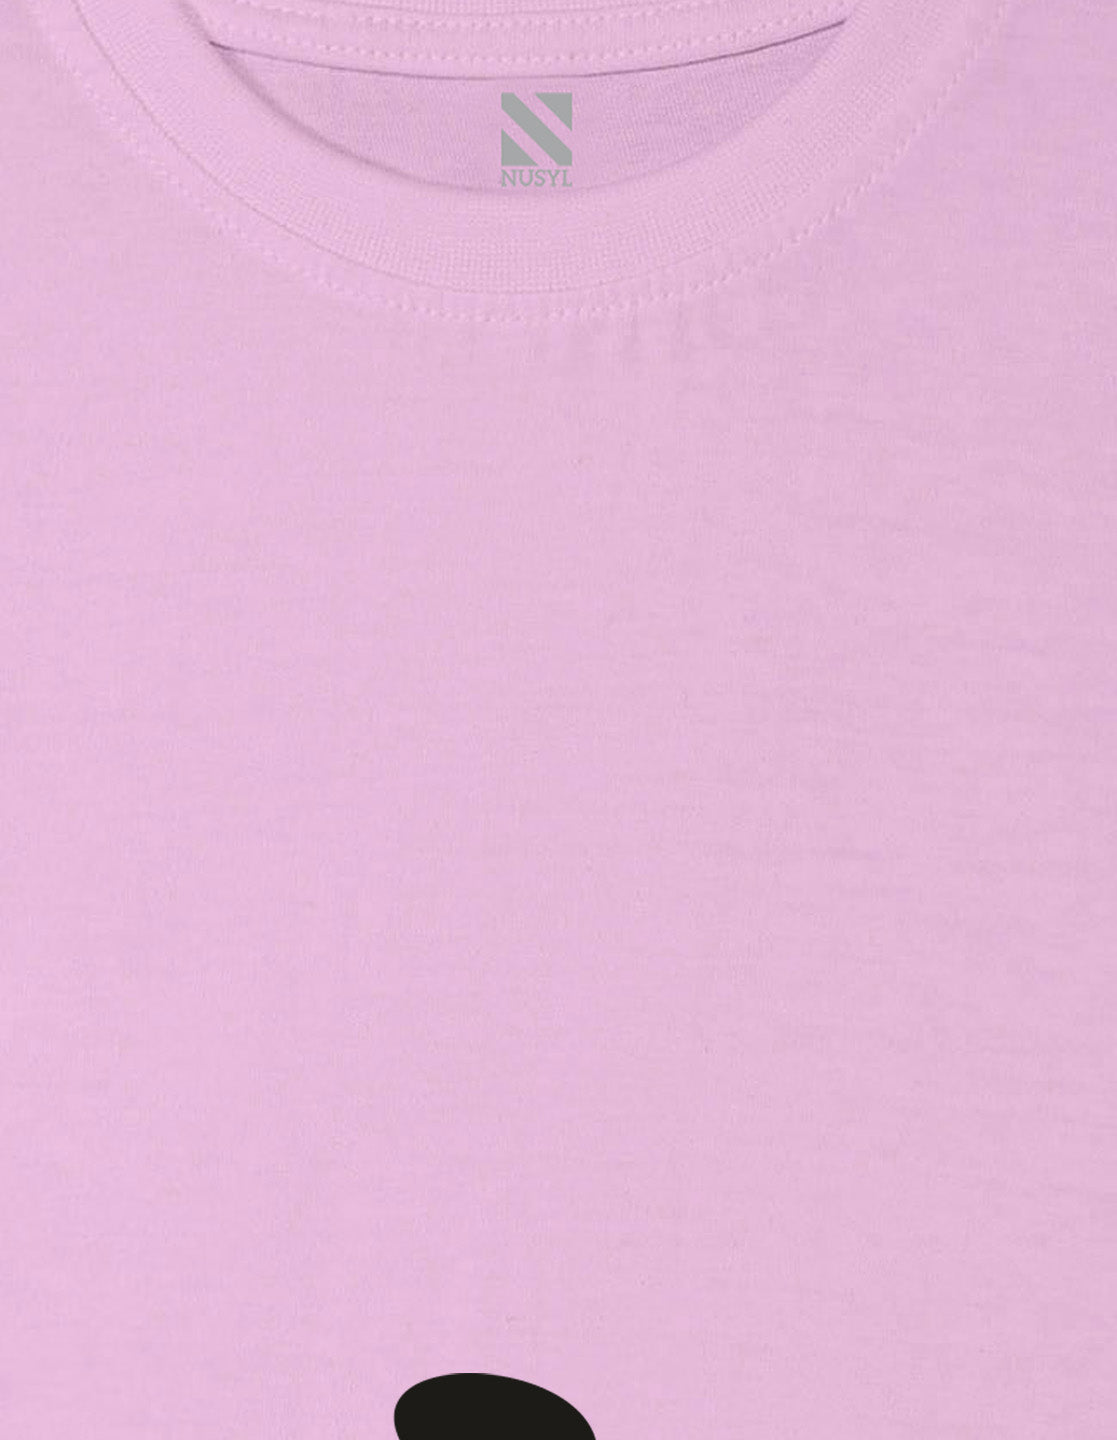 Nusyl Panda Printed Light Pink Colour T-shirts